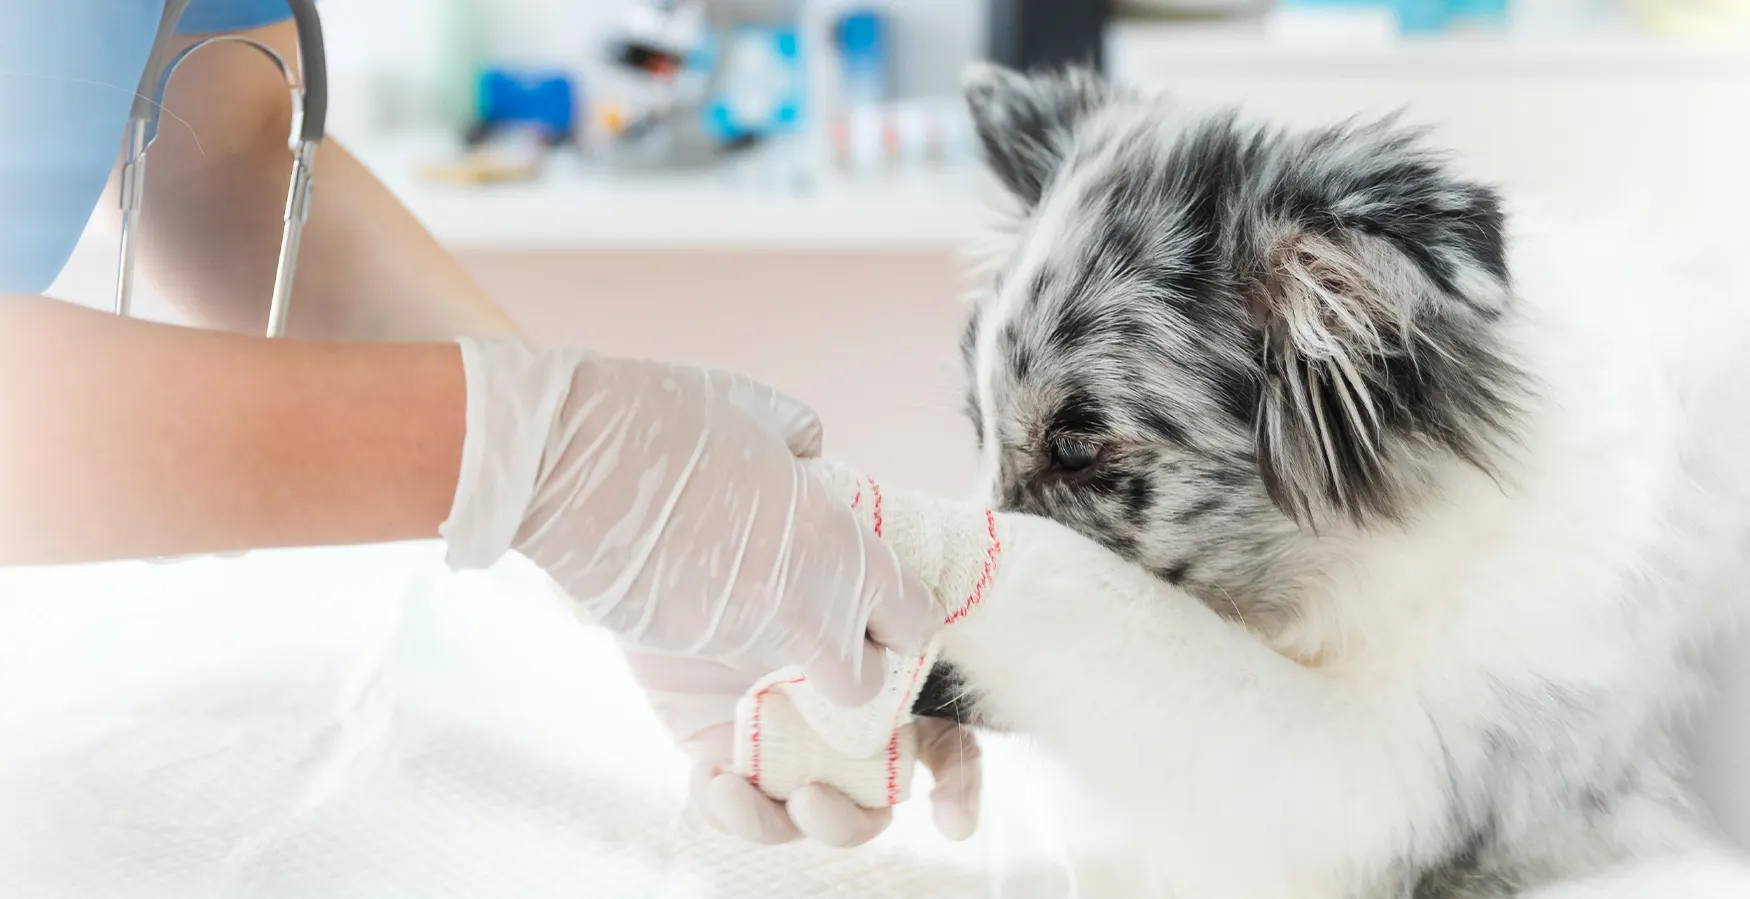 Auxiliar de Fisioterapia animal a tratar do cão, no âmbito do Curso Auxiliar de Fisioterapia e Reabilitação Animal